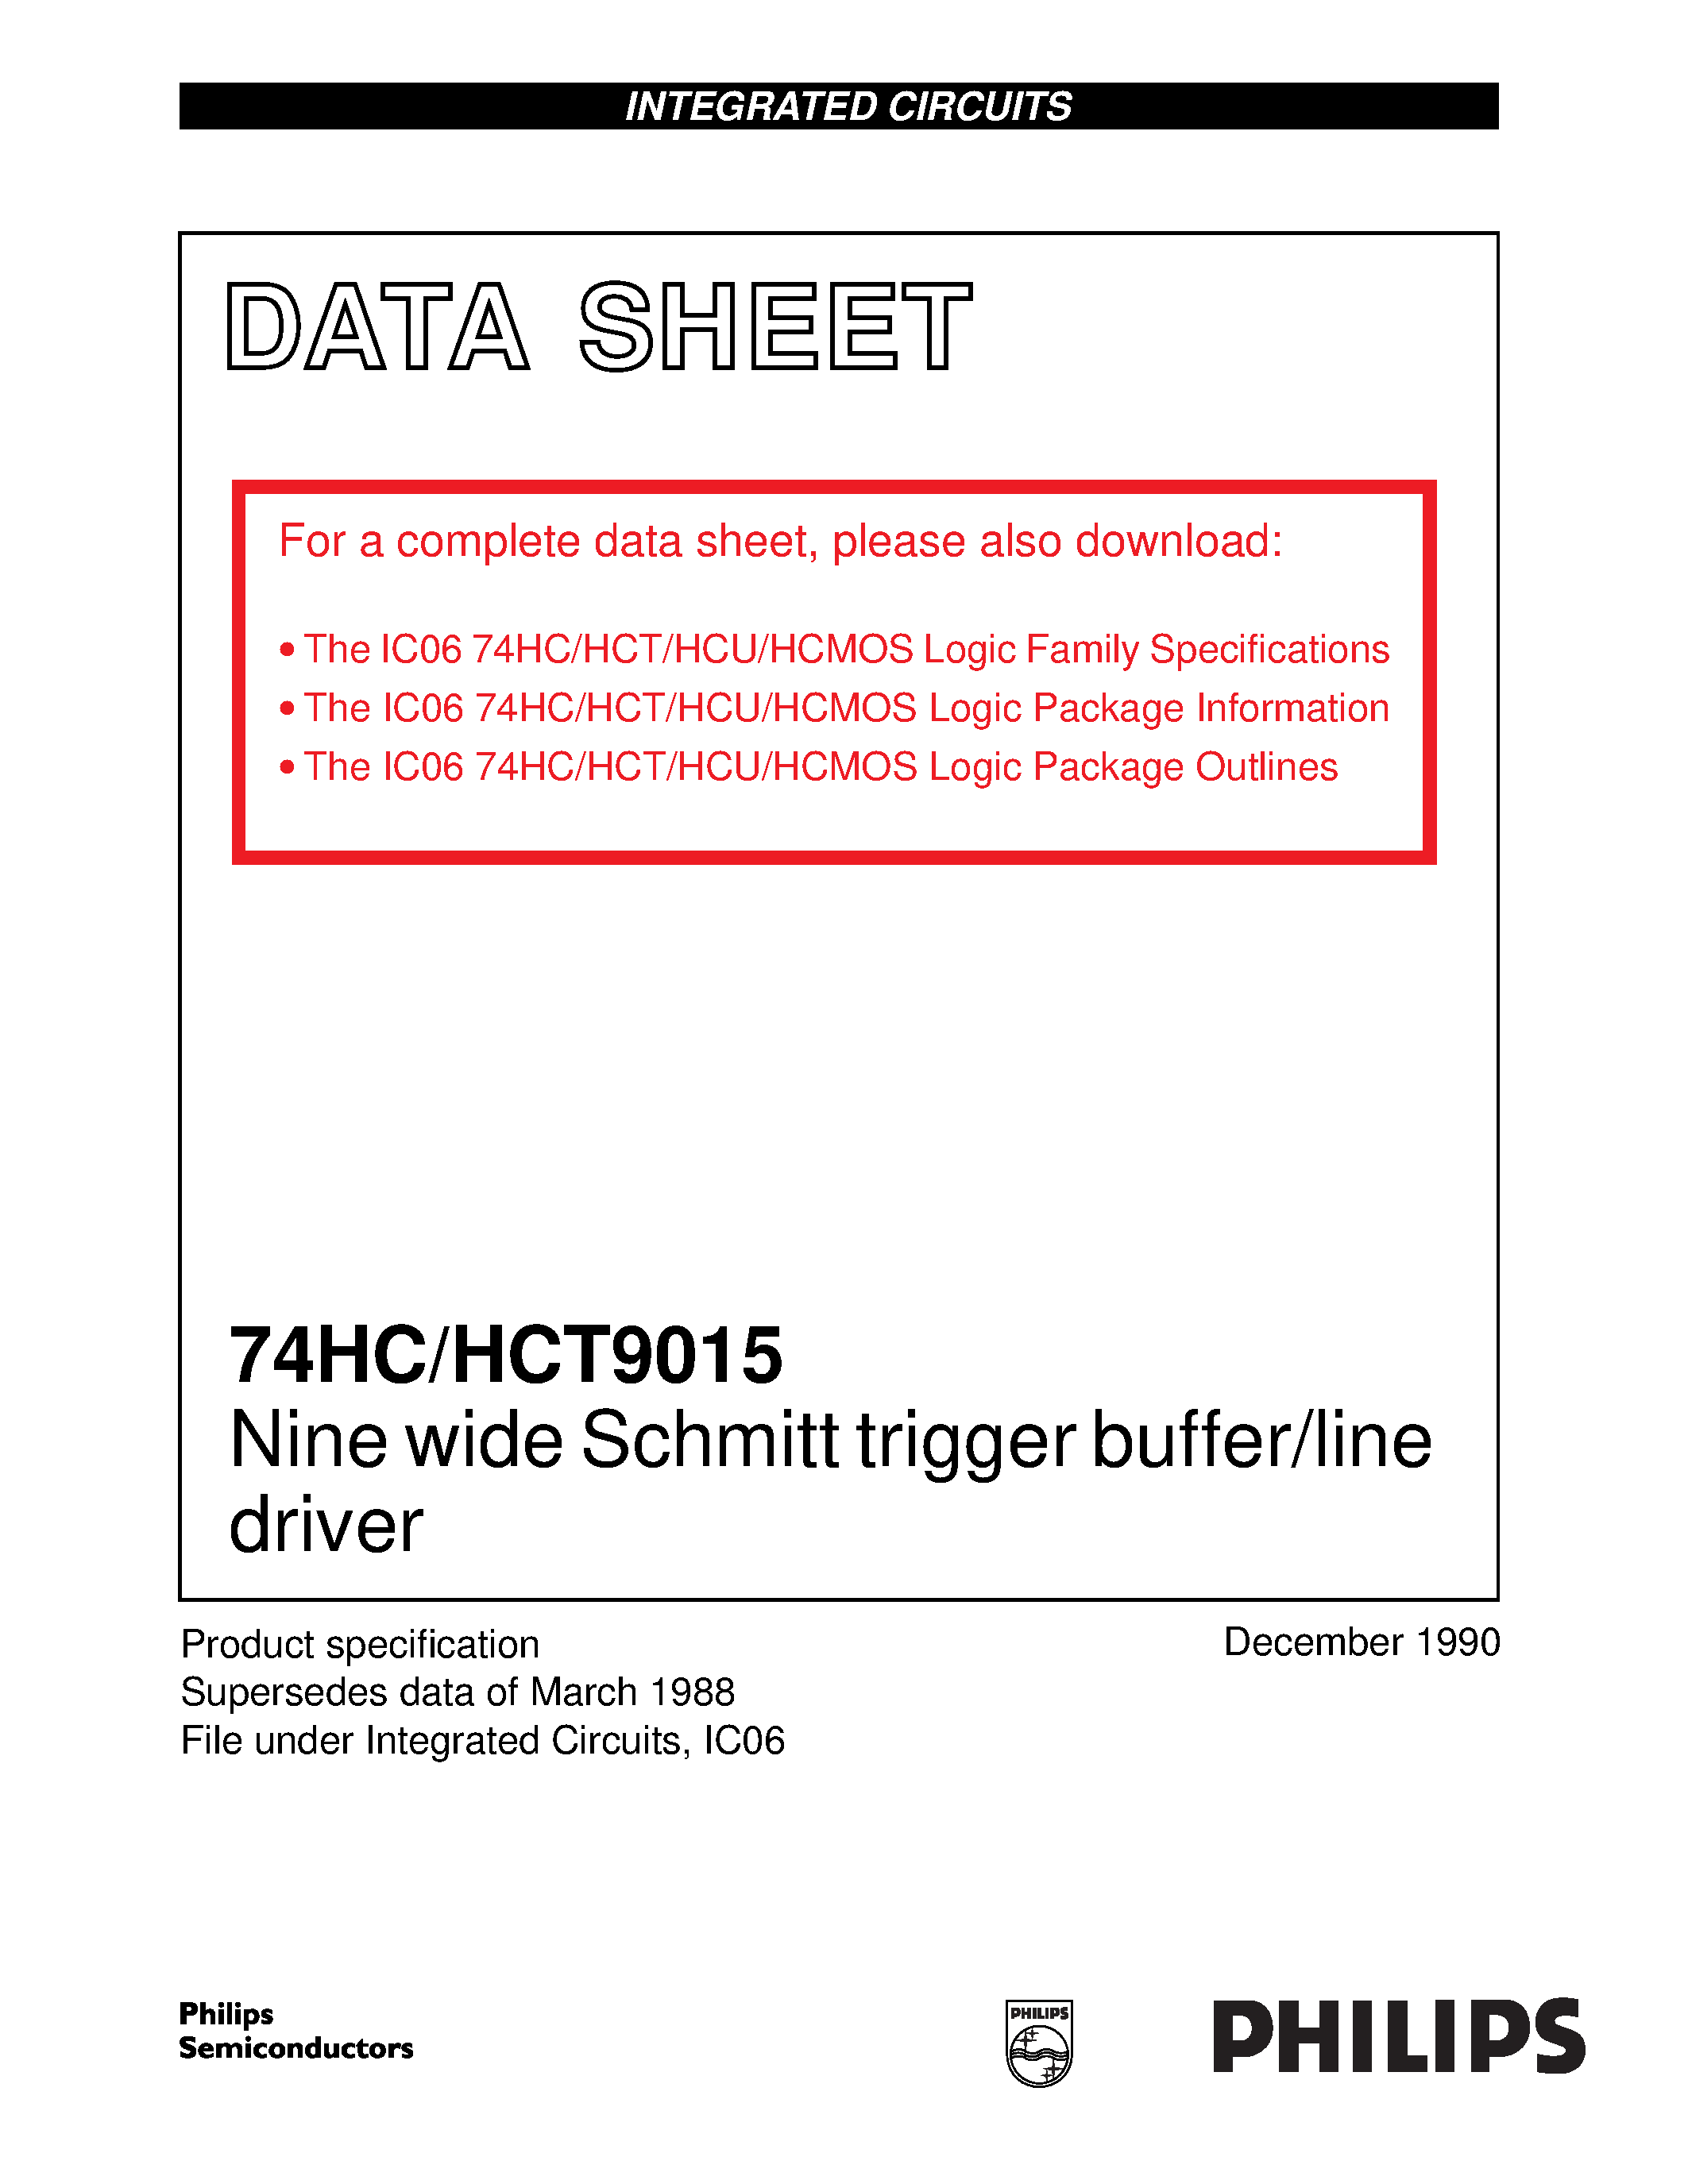 Даташит 74HCT9015 - Nine wide Schmitt trigger buffer/line driver страница 1